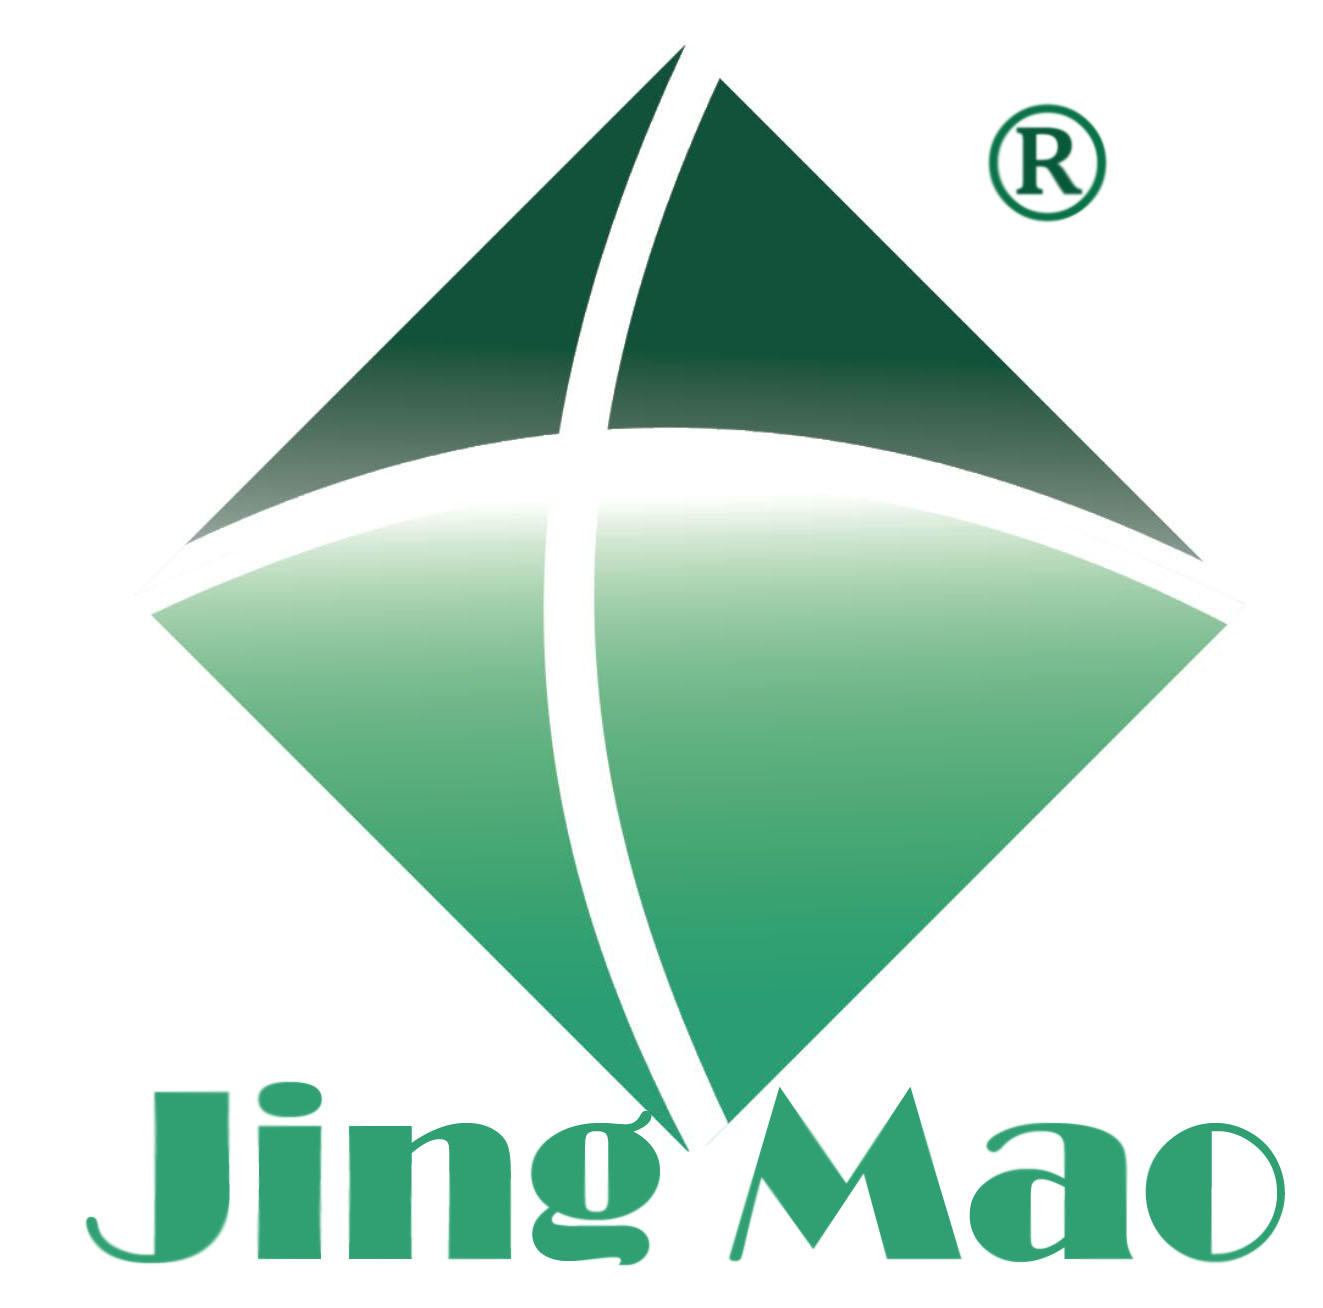 Jingmao Technology Co.,Ltd